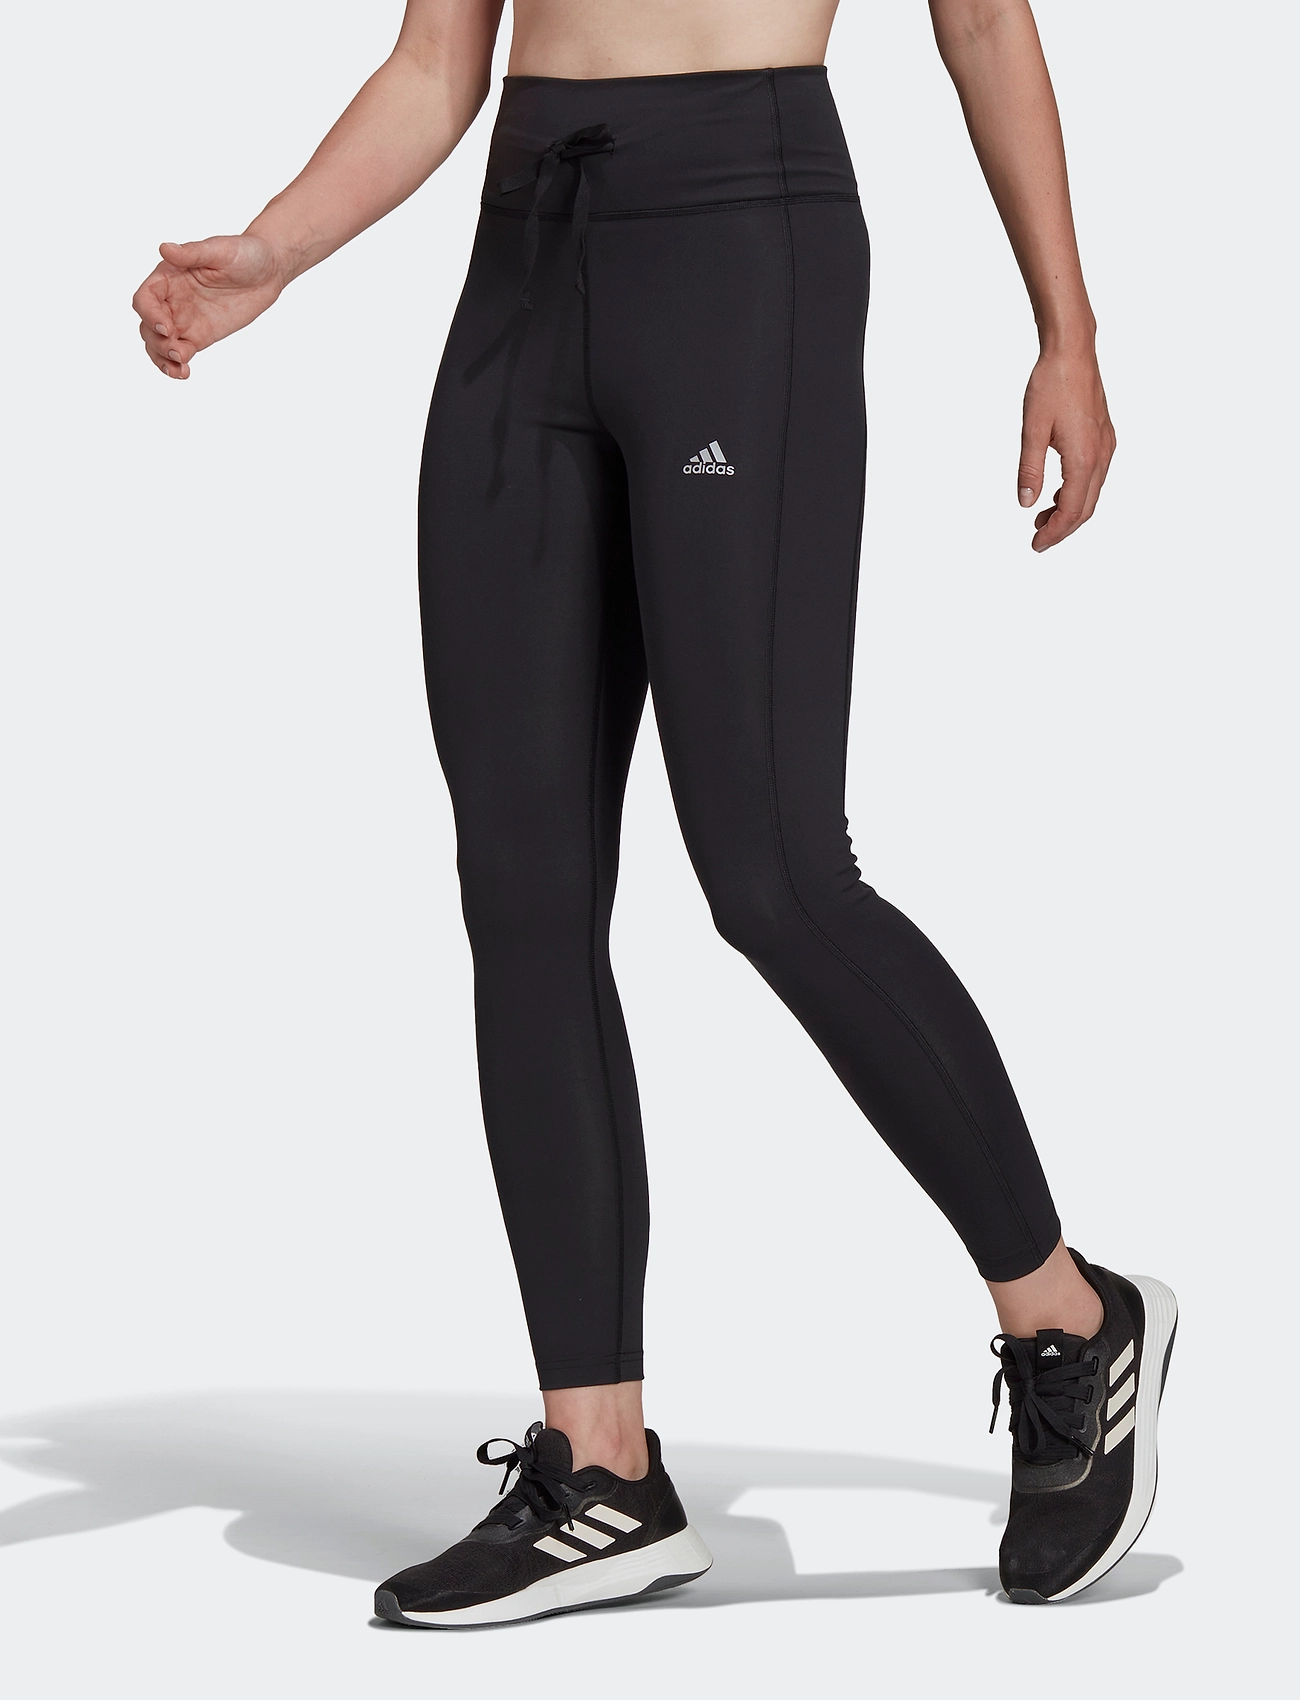 Helligdom ekko Massakre adidas Performance Running Essentials 7/8 Tights - Leggings & Tights |  Boozt.com